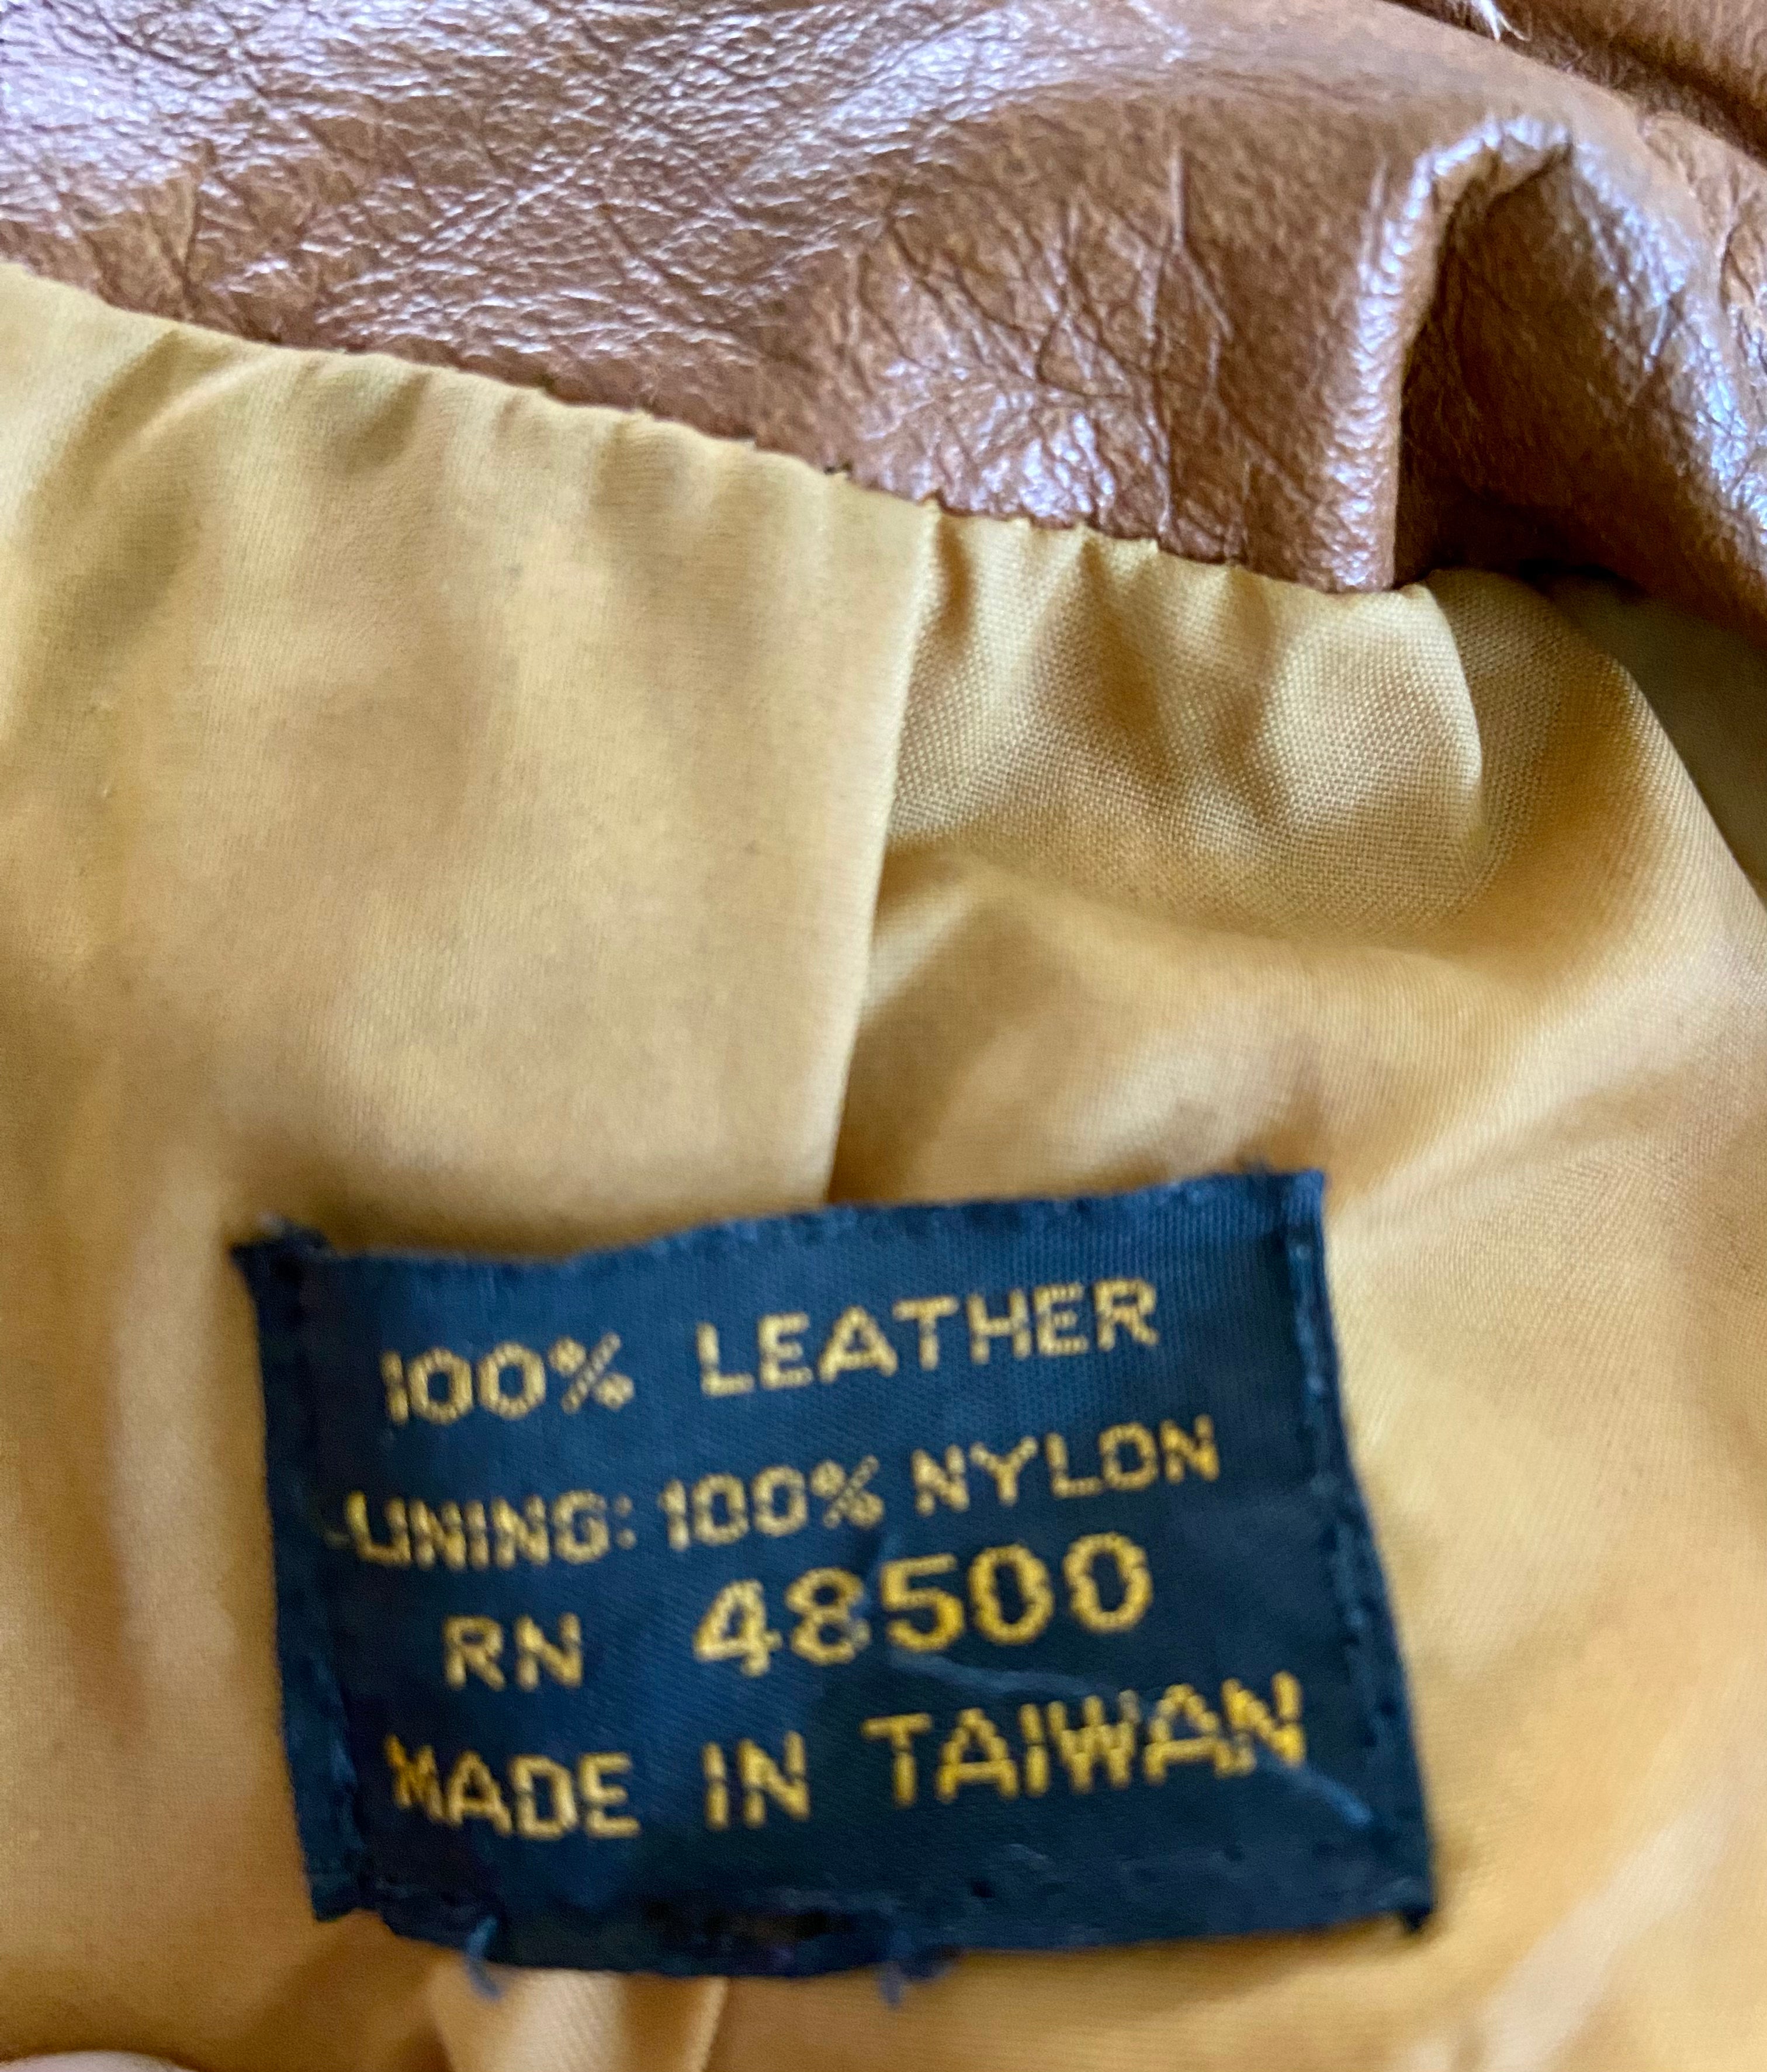 Vintage leather coat